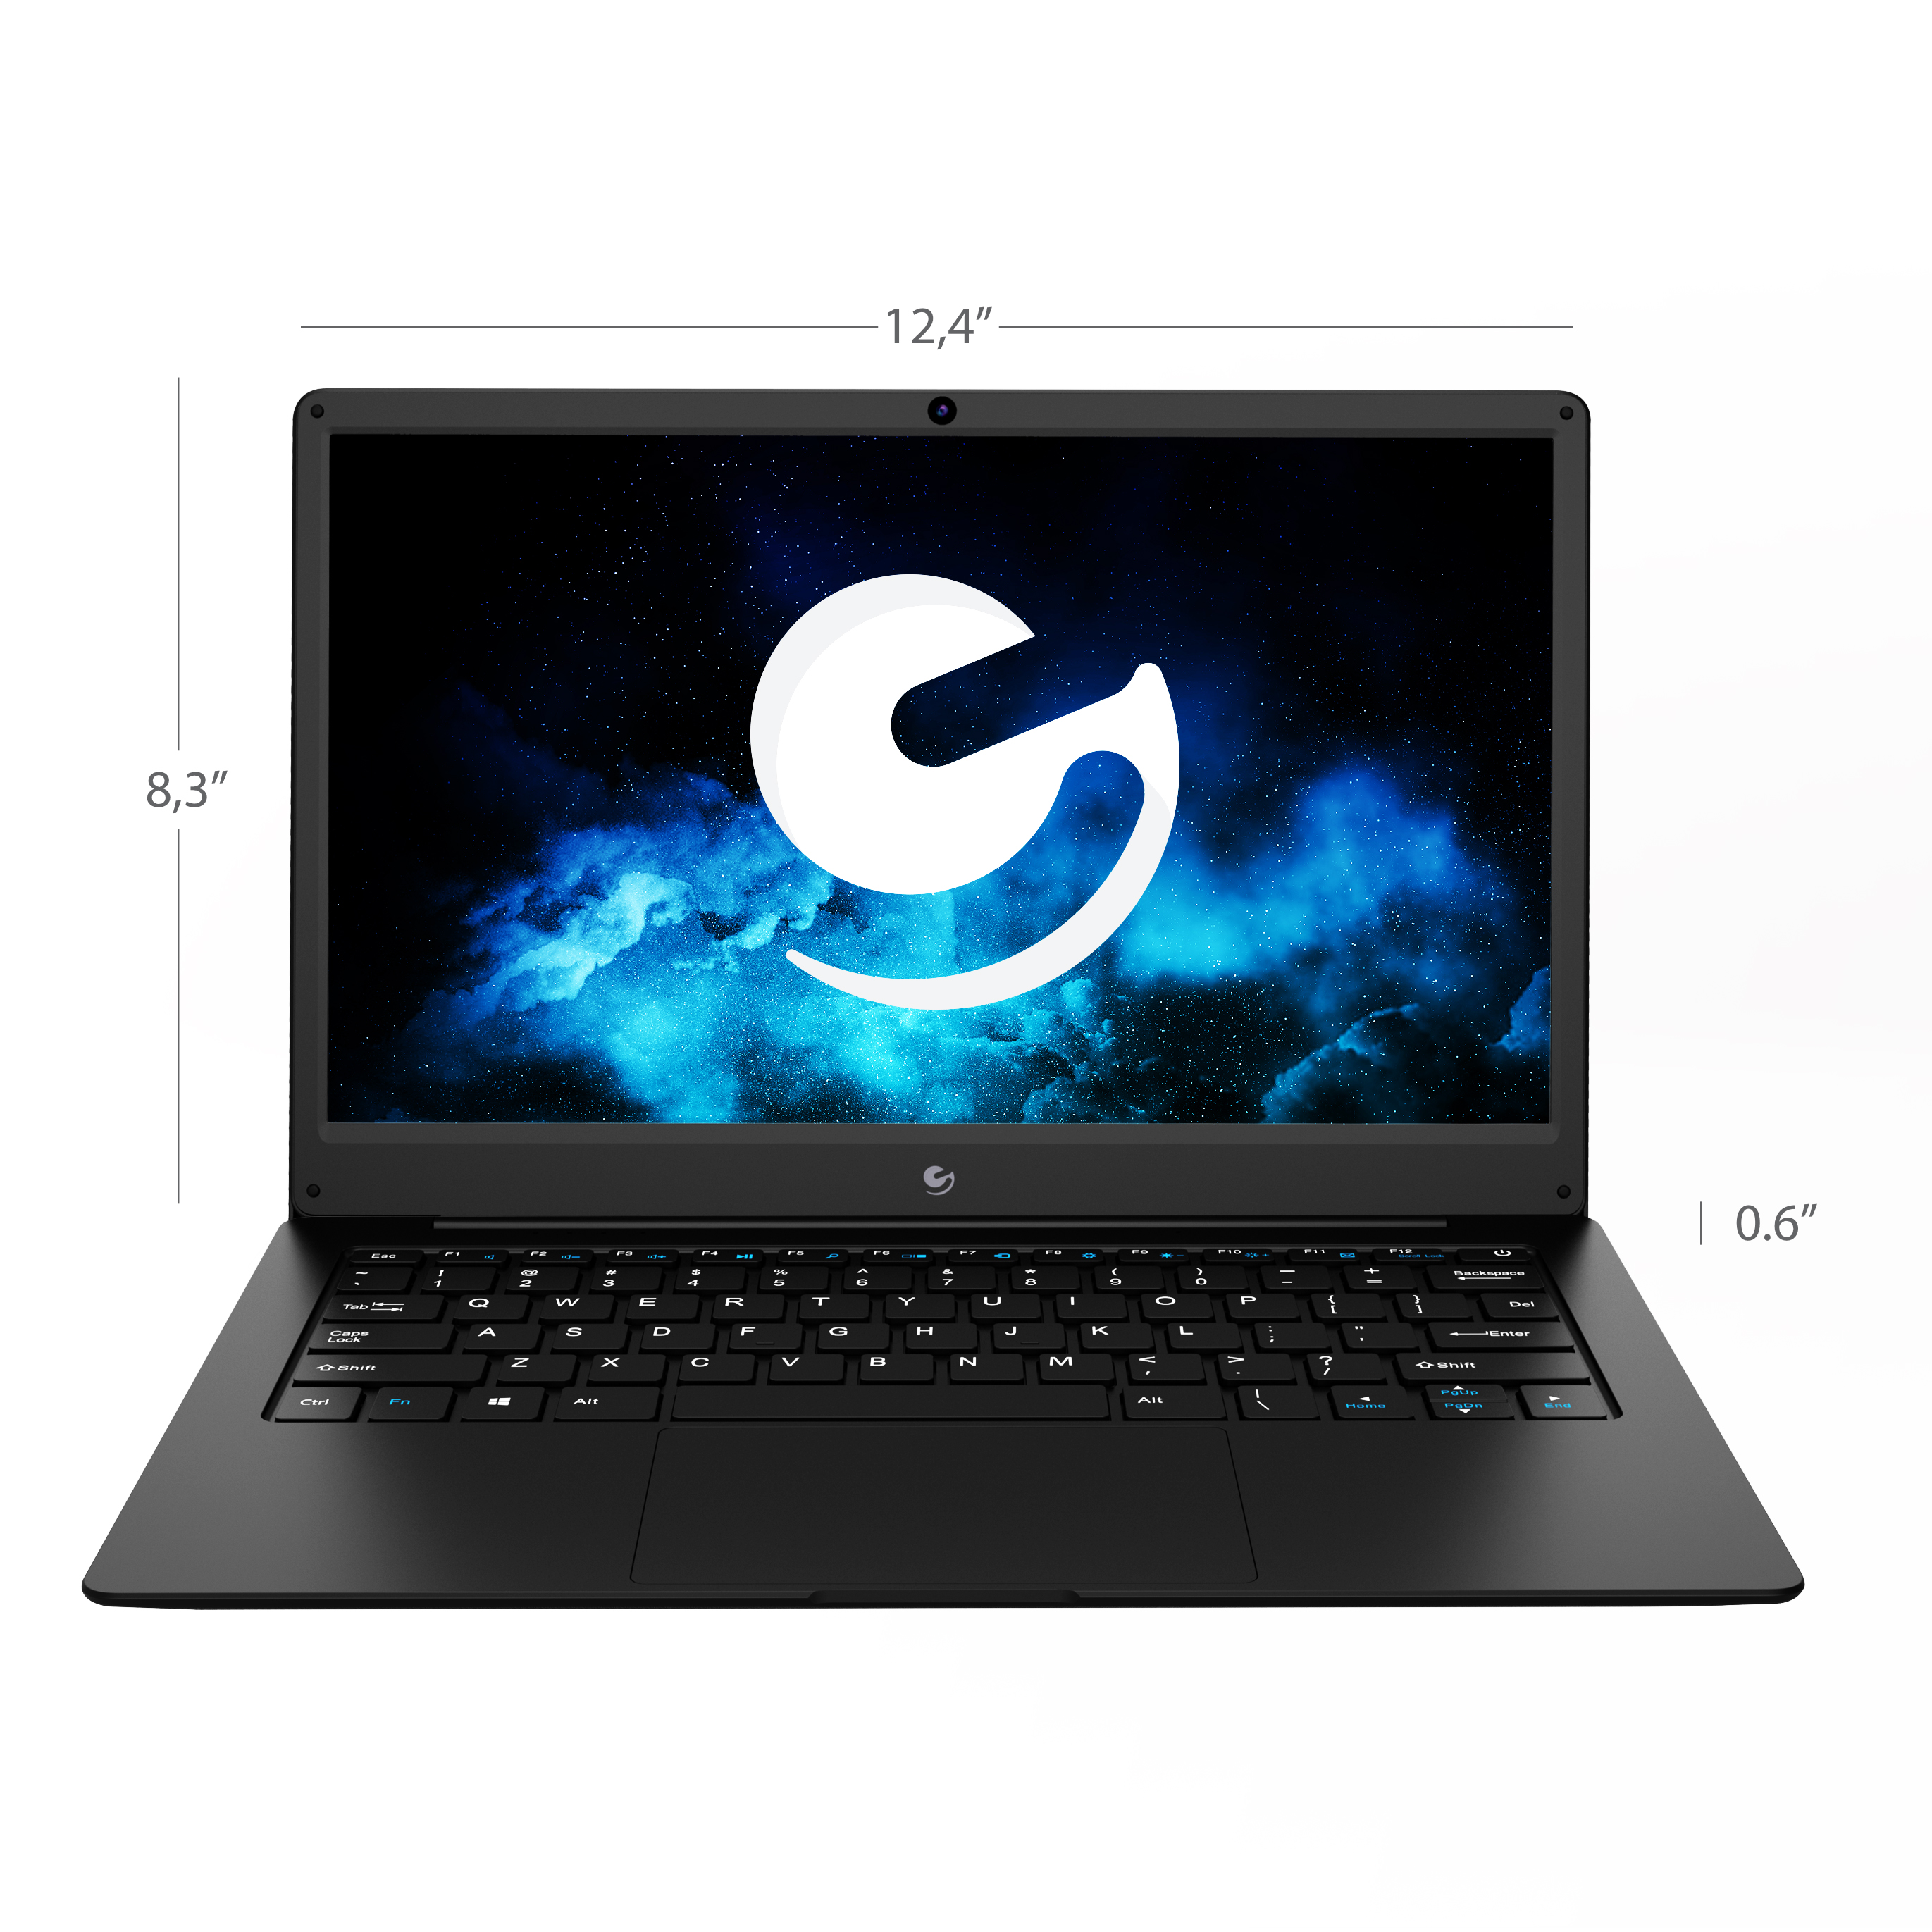 Ematic 13.3" Laptop with Full IPS HD Display, 4GB RAM, 64 GB Storage, AMD & Windows 10, Black (EWT148AB) - image 2 of 8